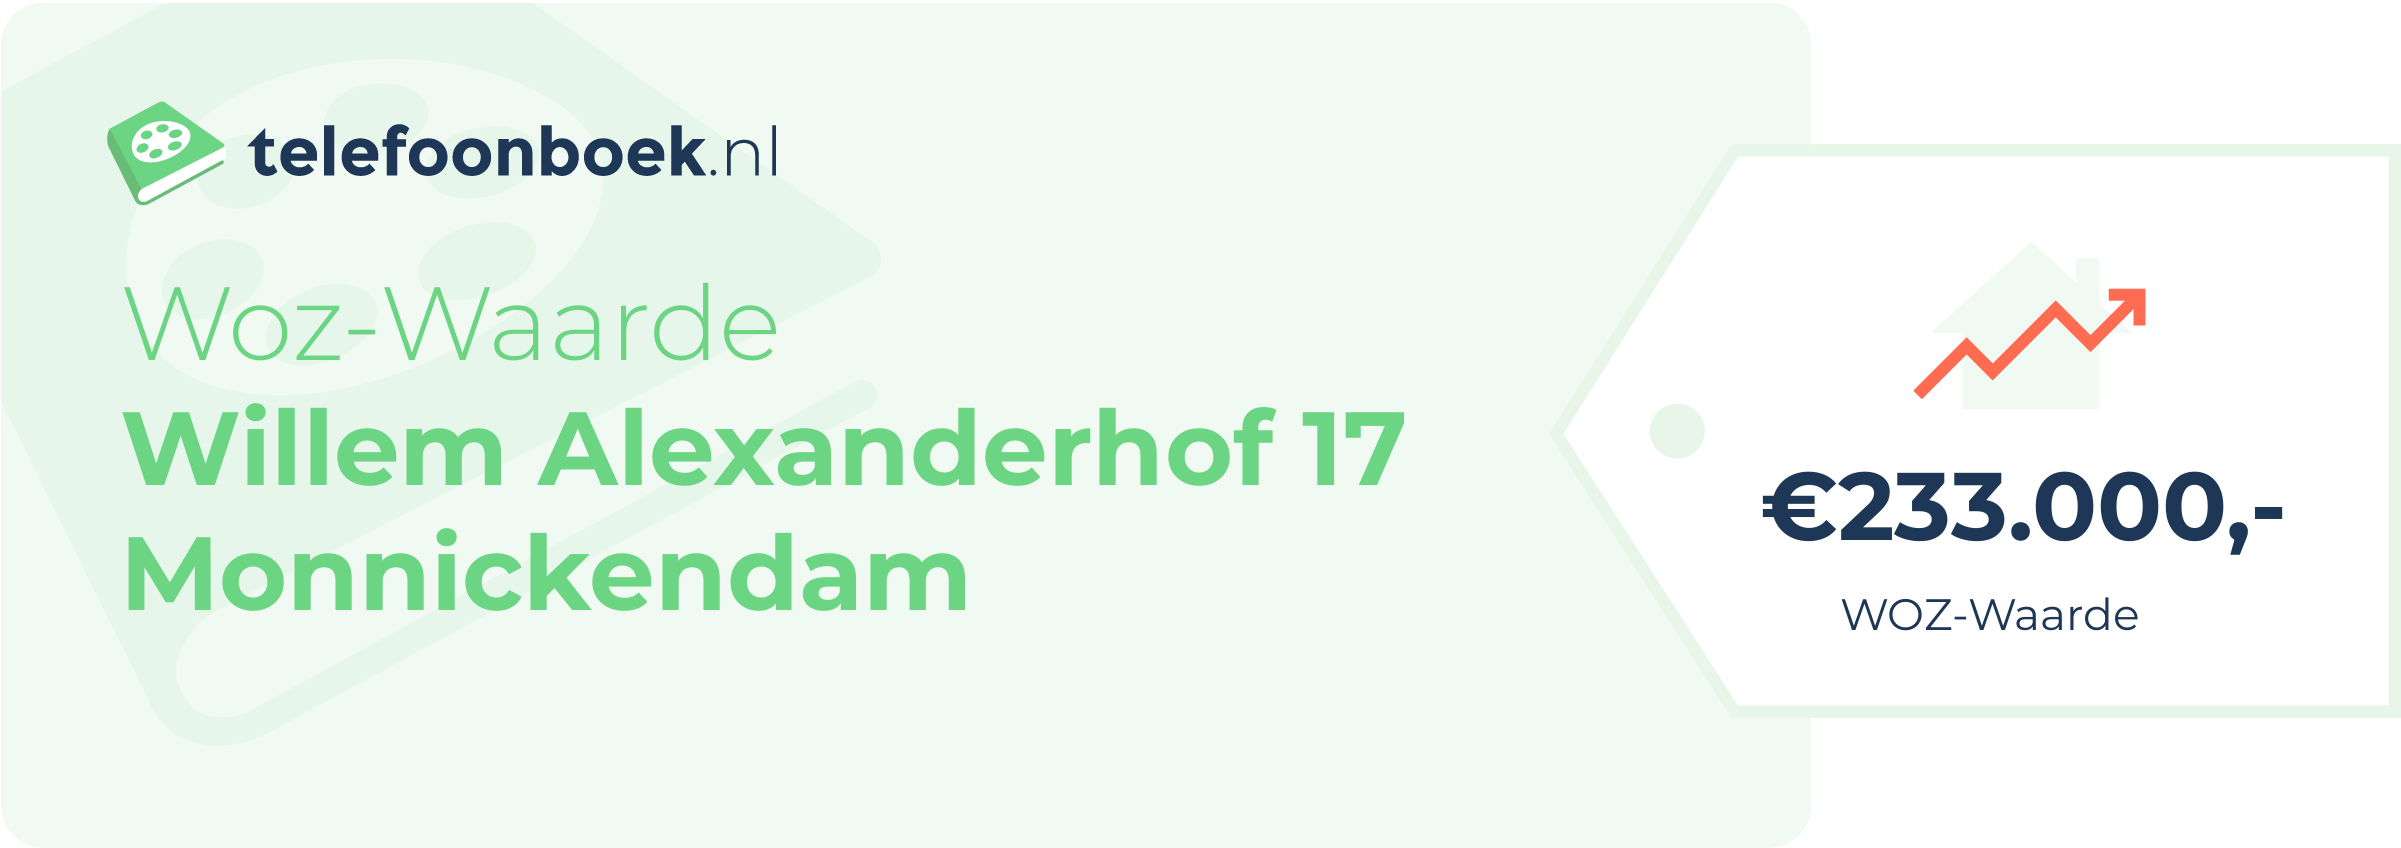 WOZ-waarde Willem Alexanderhof 17 Monnickendam